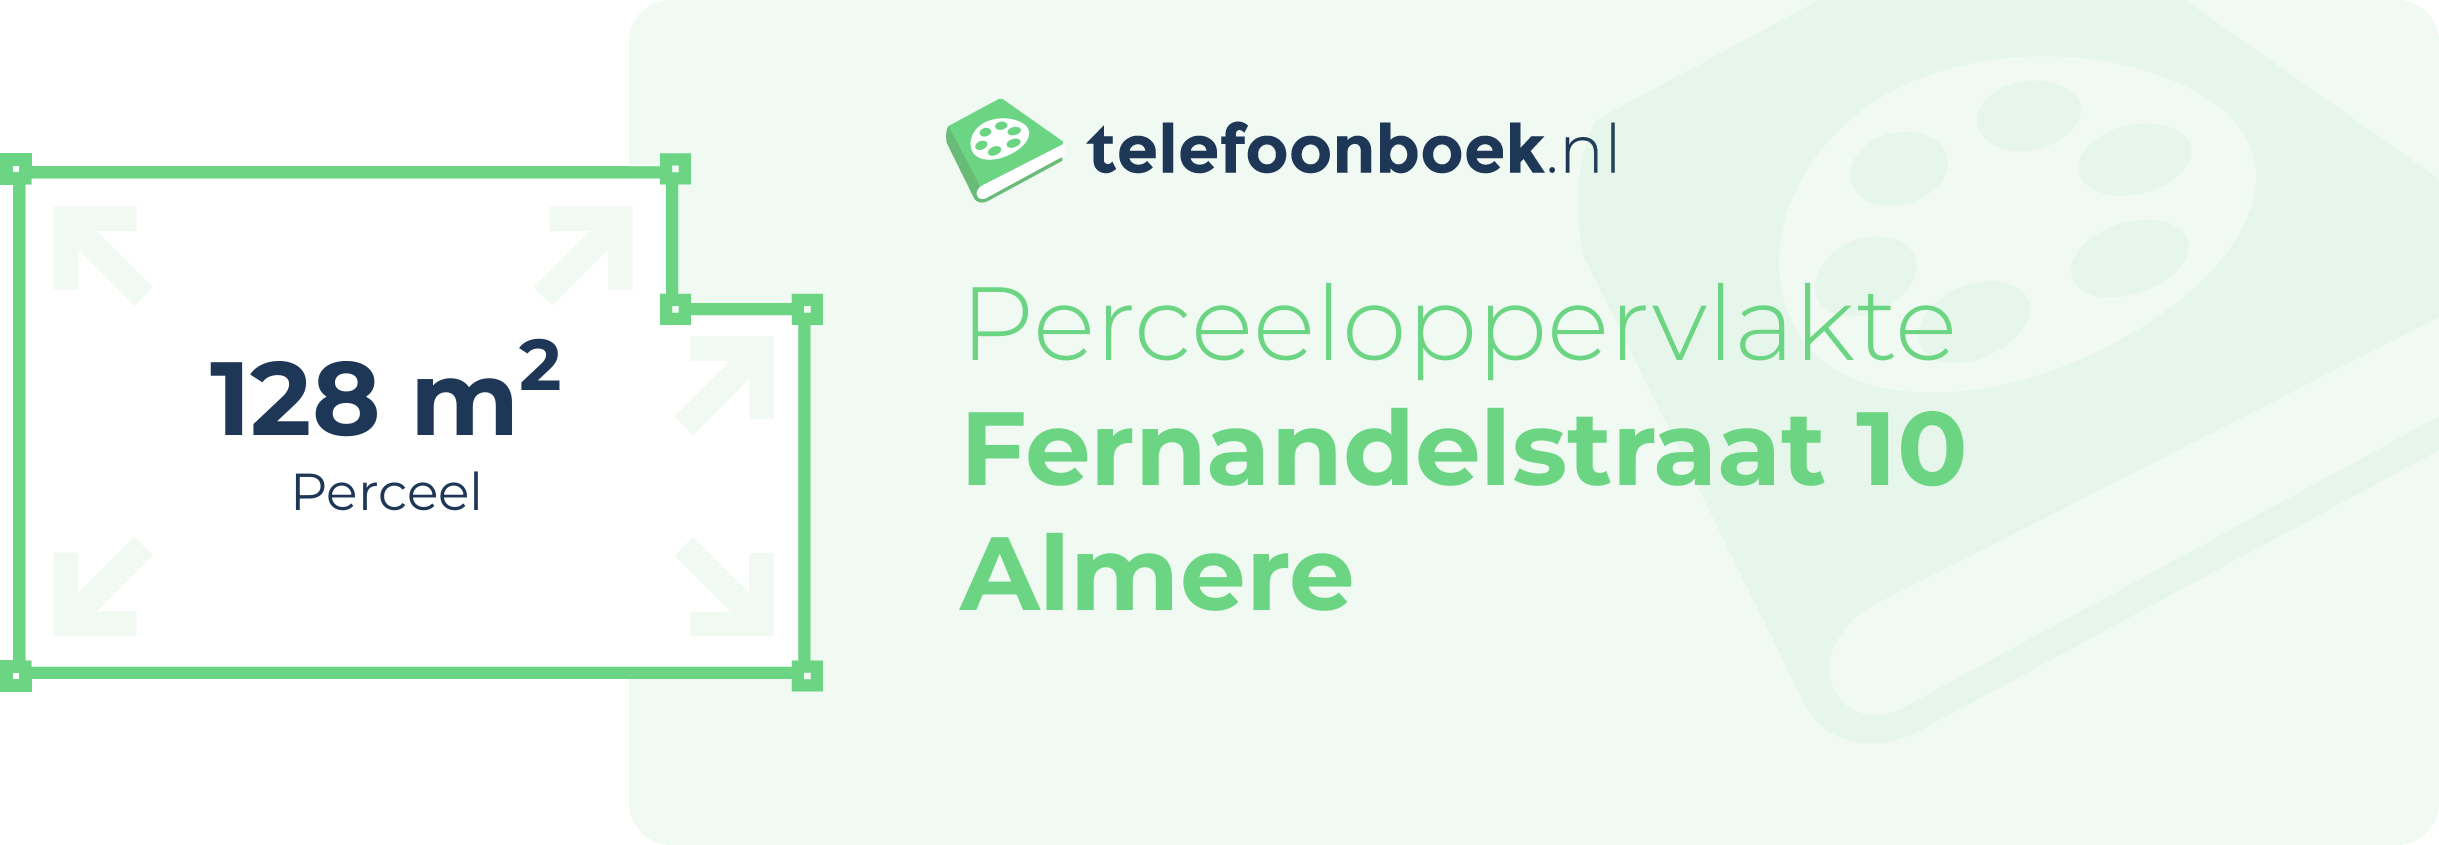 Perceeloppervlakte Fernandelstraat 10 Almere